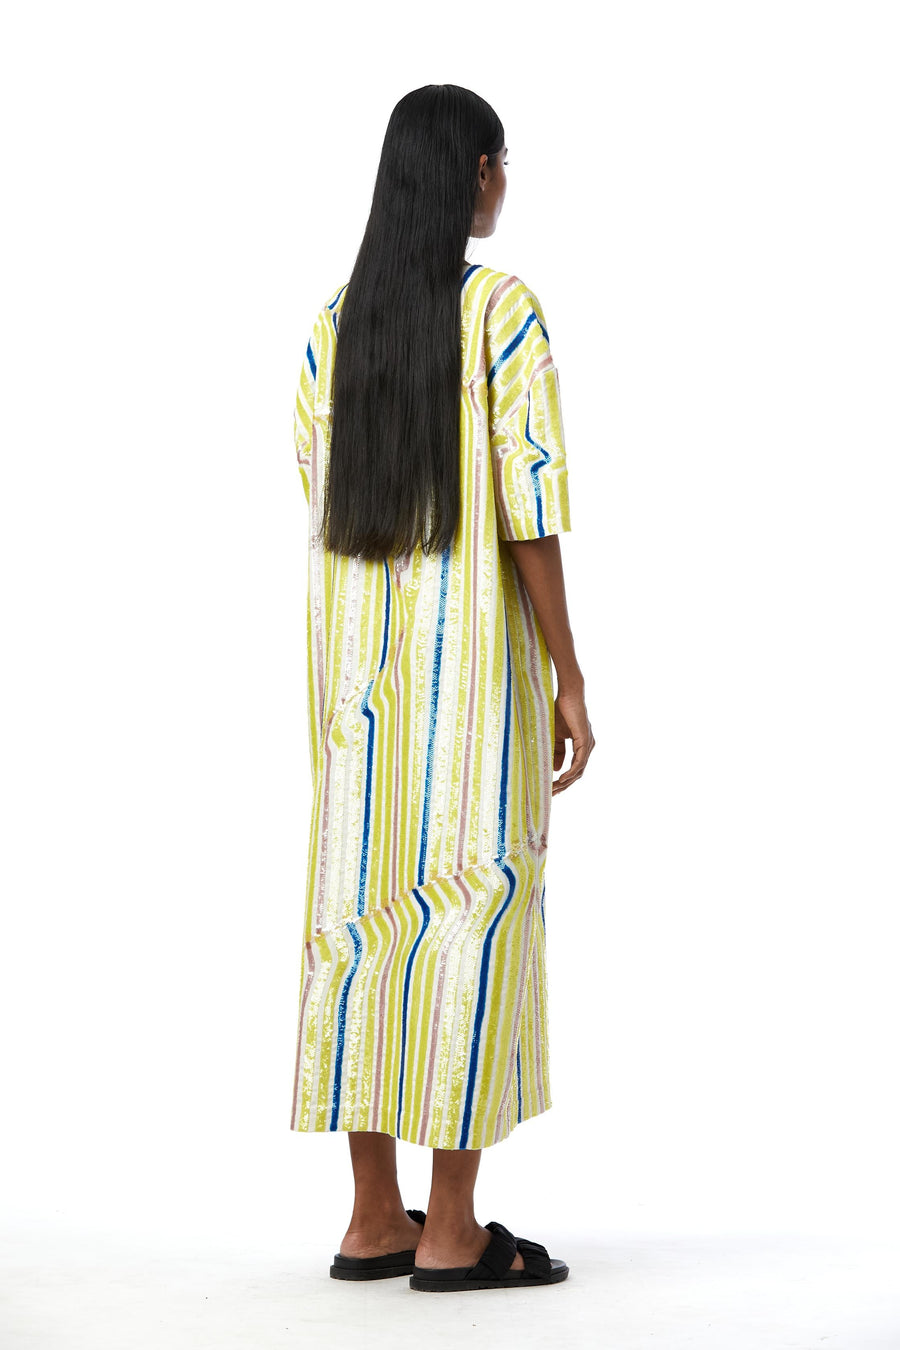 ‘CITRINE’ ILLUSIONED DRESS - Kanika Goyal Label